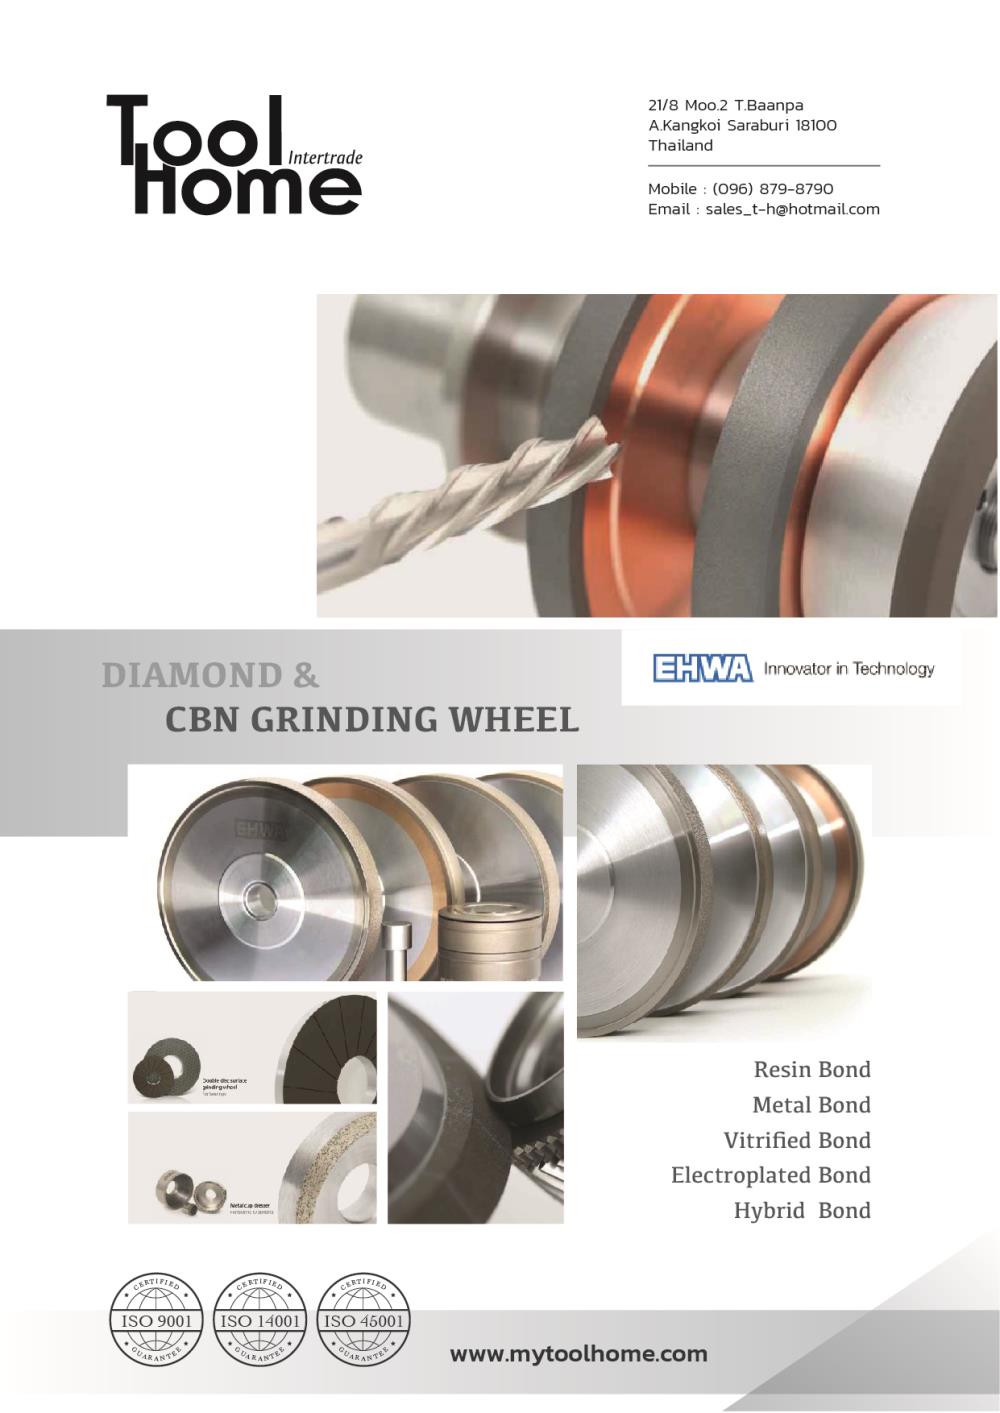 Diamond Grinding & Cutting Wheel